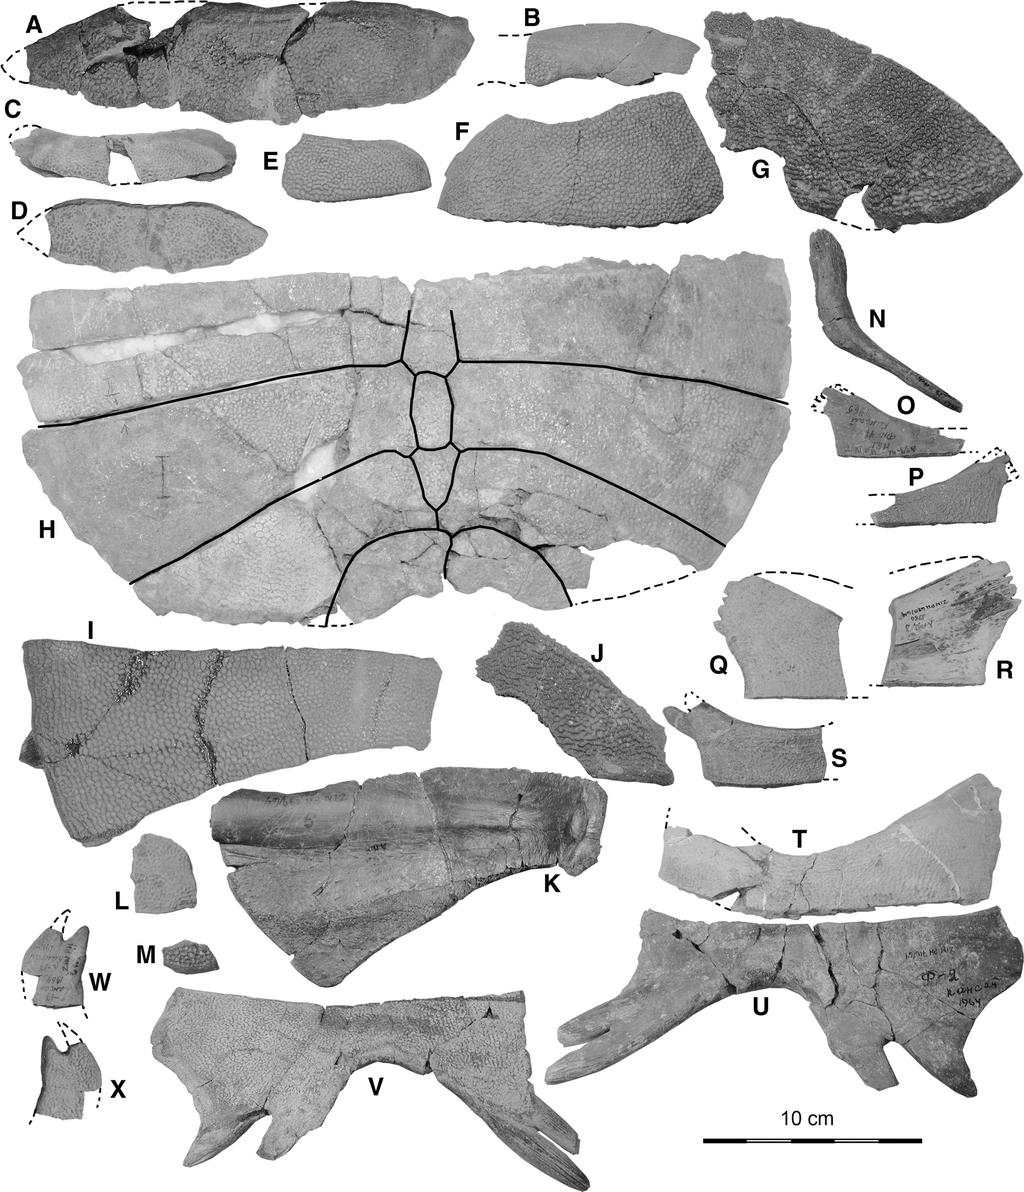 JOURNAL OF VERTEBRATE PALEONTOLOGY, VOL. 30, NO. 2, 2010 386 FIGURE 4. Aspideretoides riabinini specimens from Kansai.